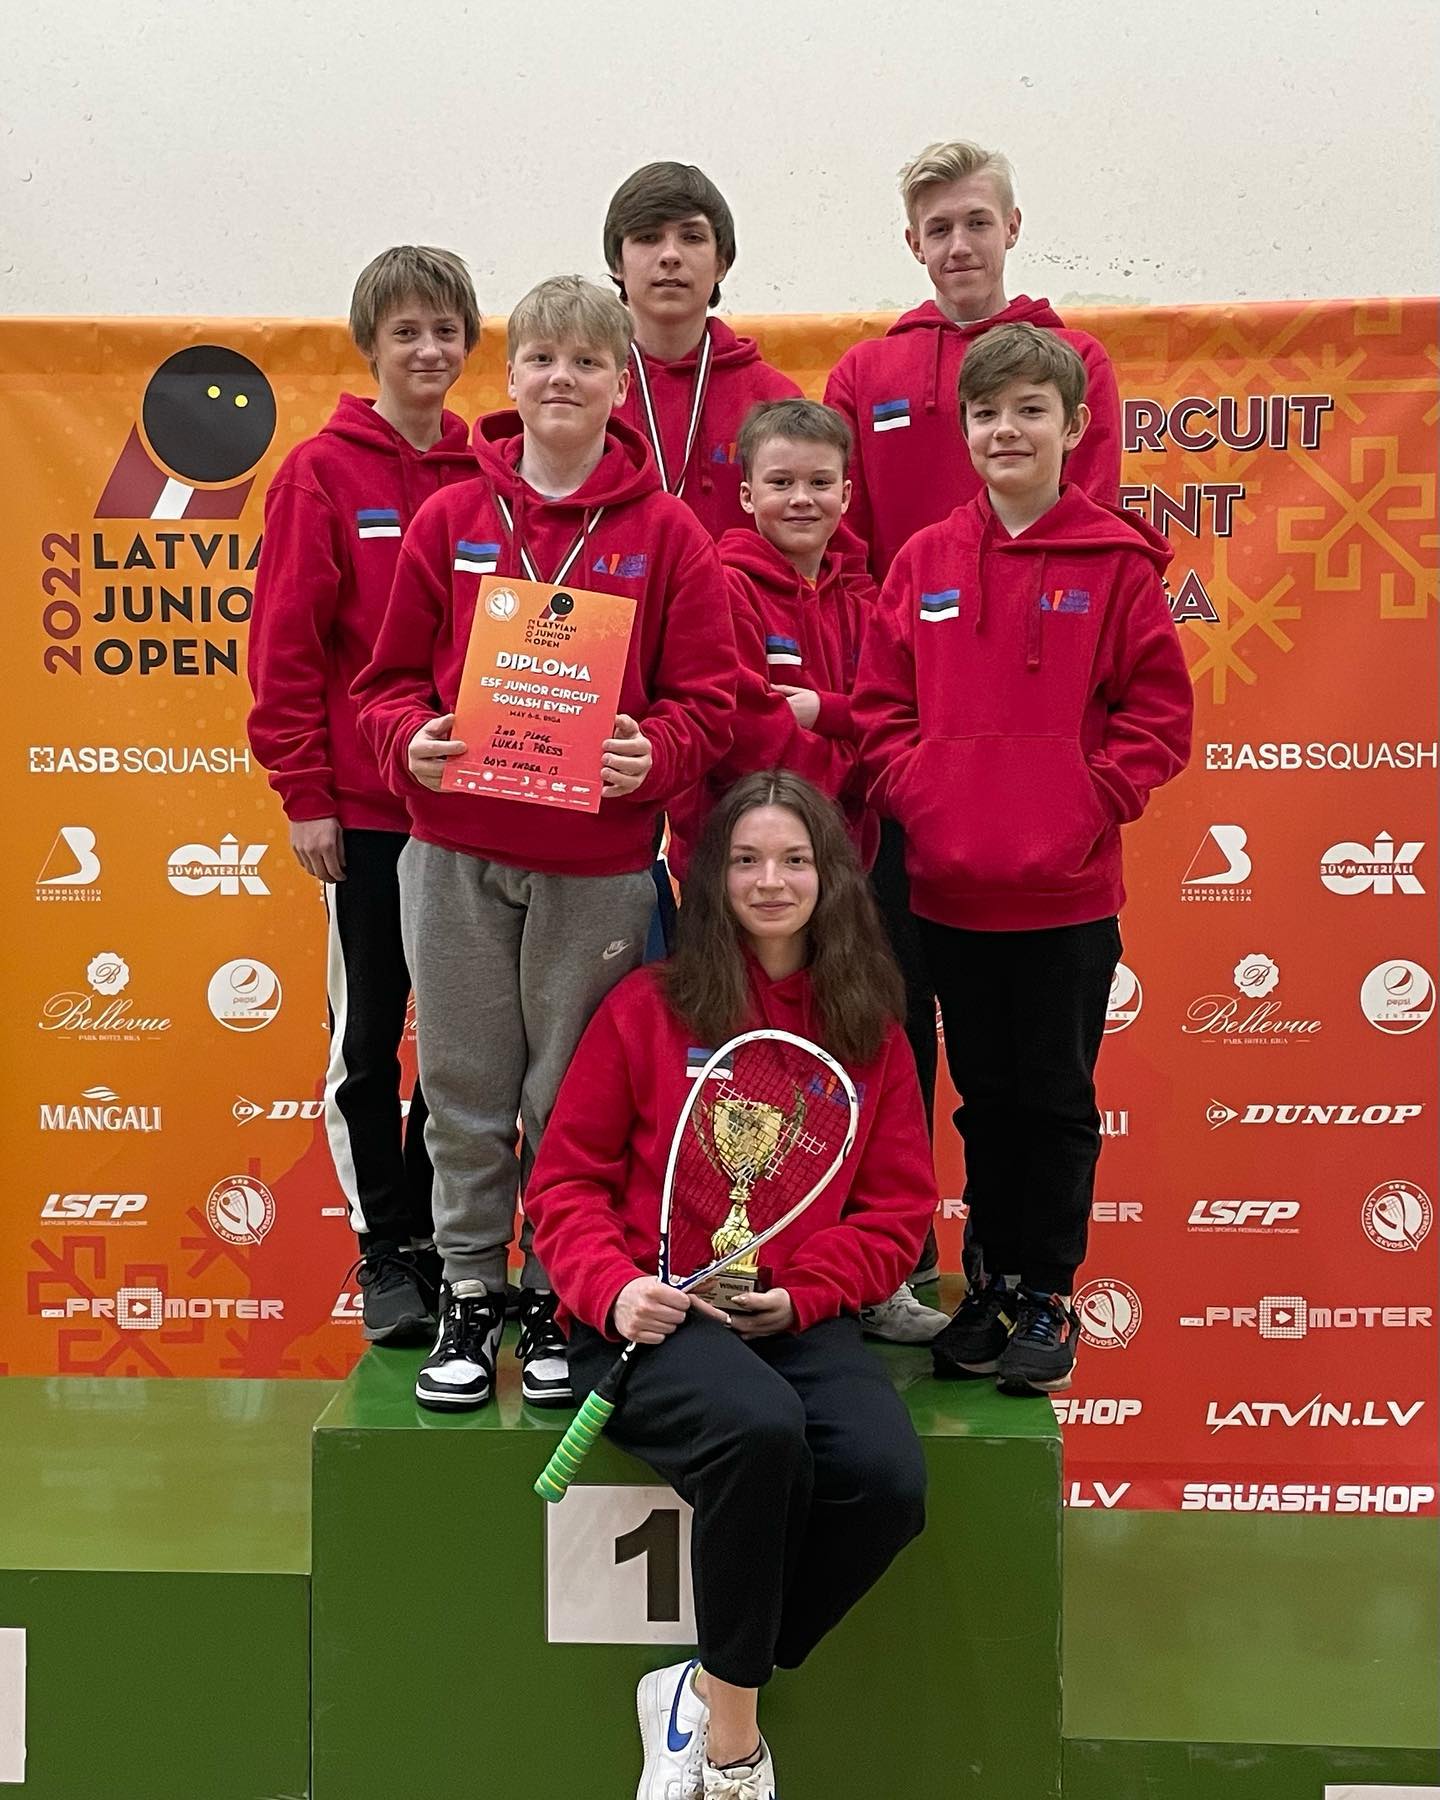 Latvian Junior Open 2022